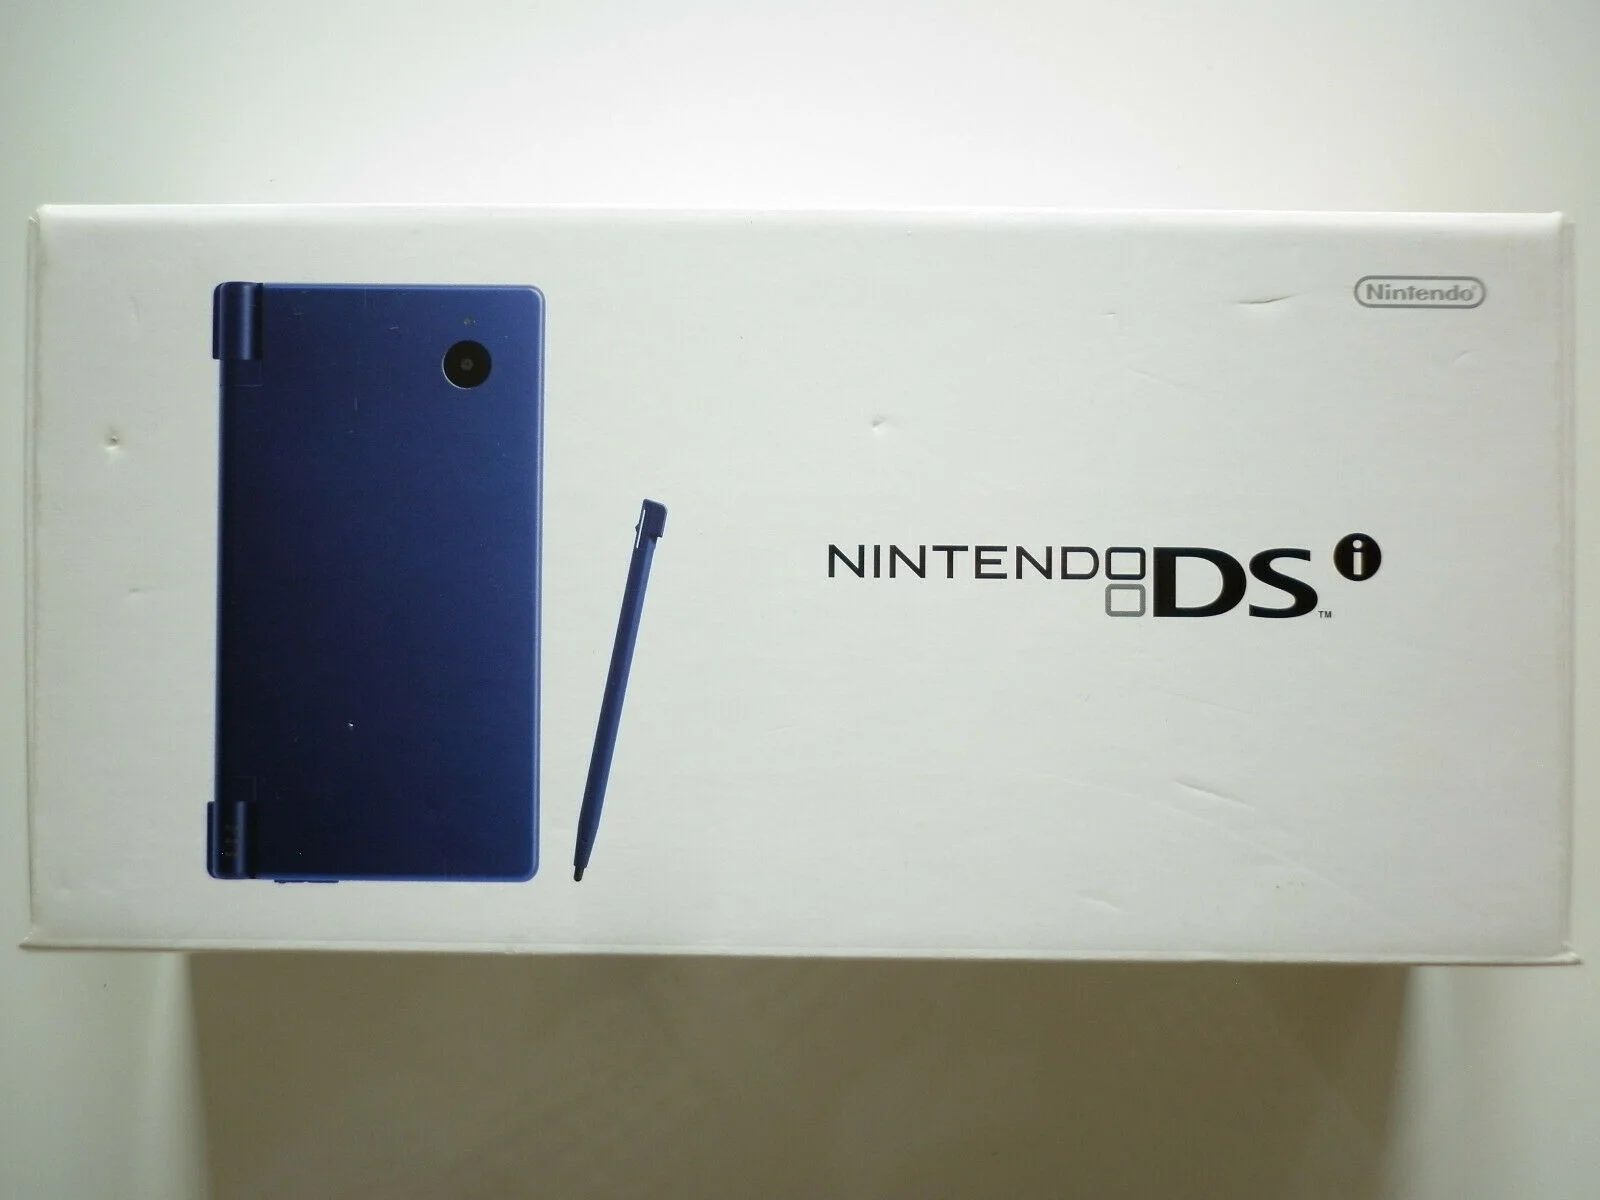  Nintendo DSi Metallic Blue Console [EU]